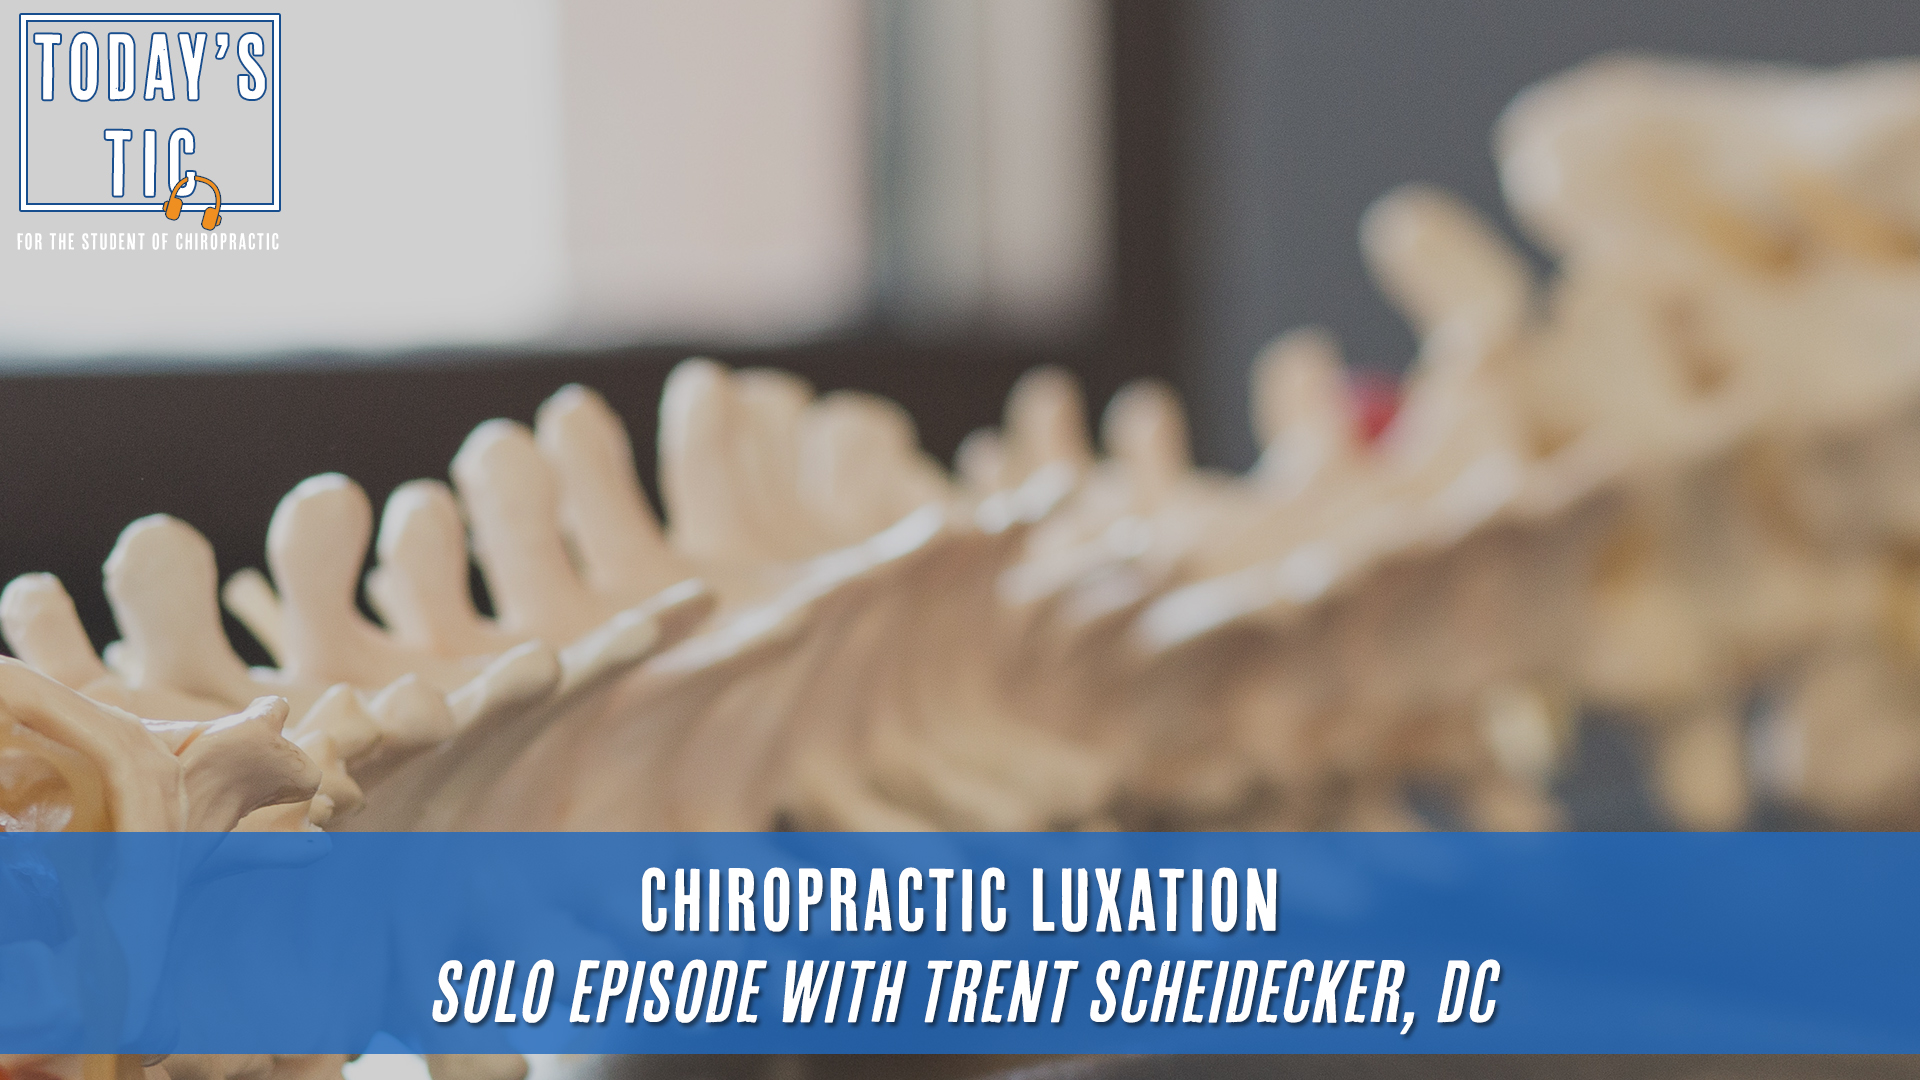 Chiropractic Luxation Solo Episode with Trent Scheidecker, DC